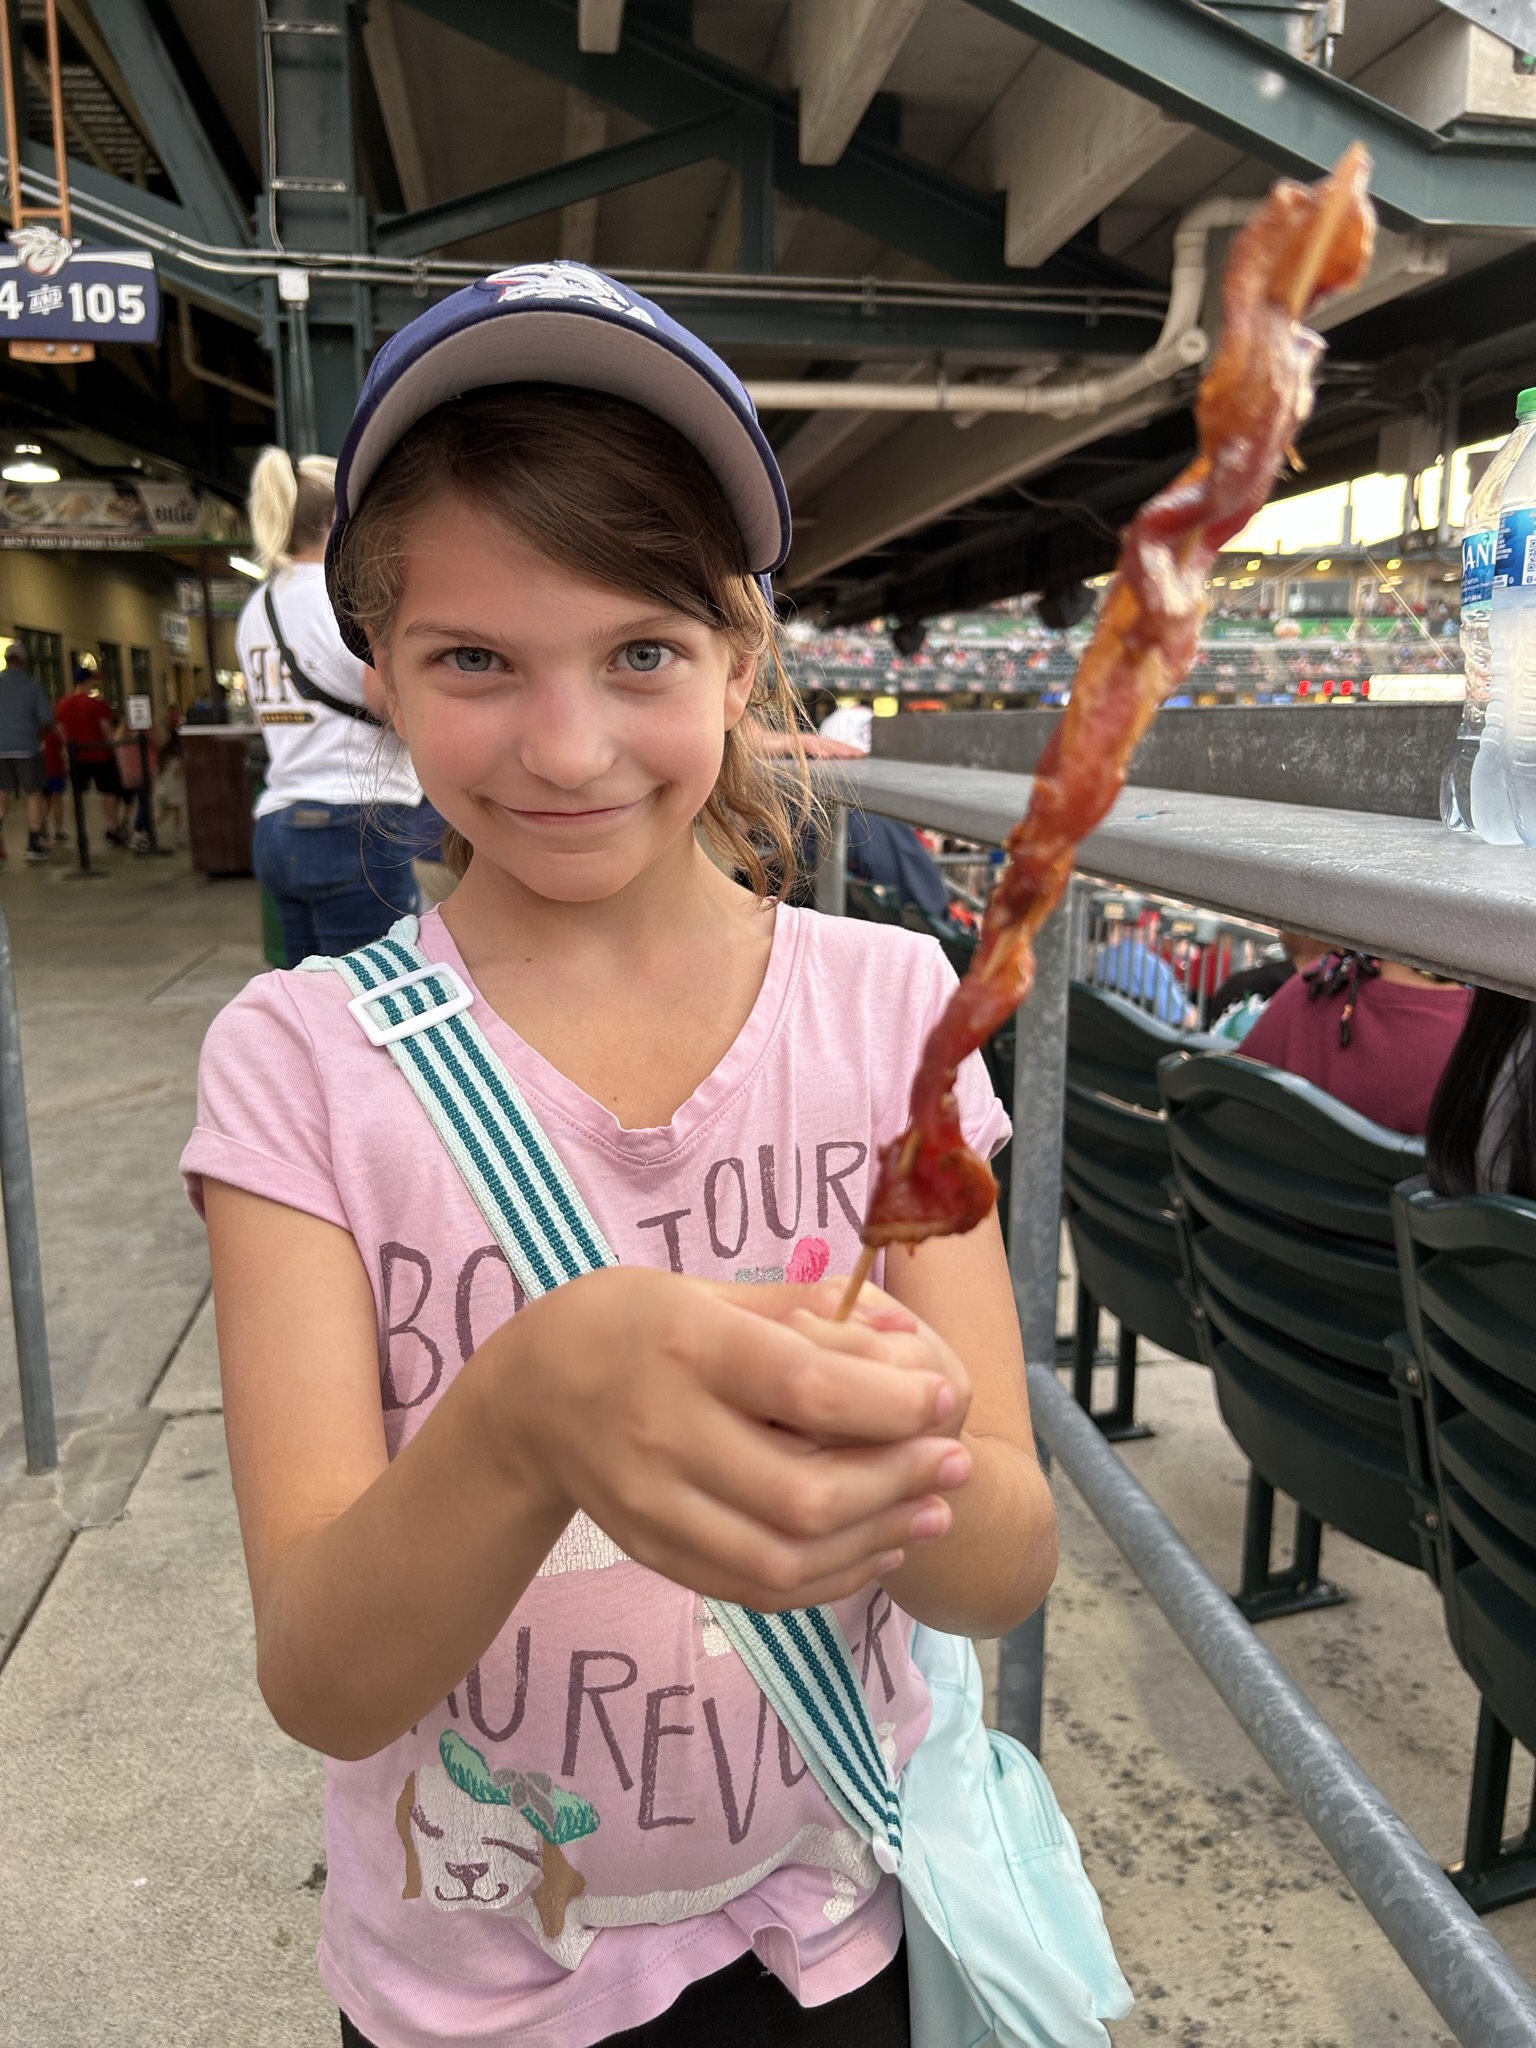 It's a bacon stick!